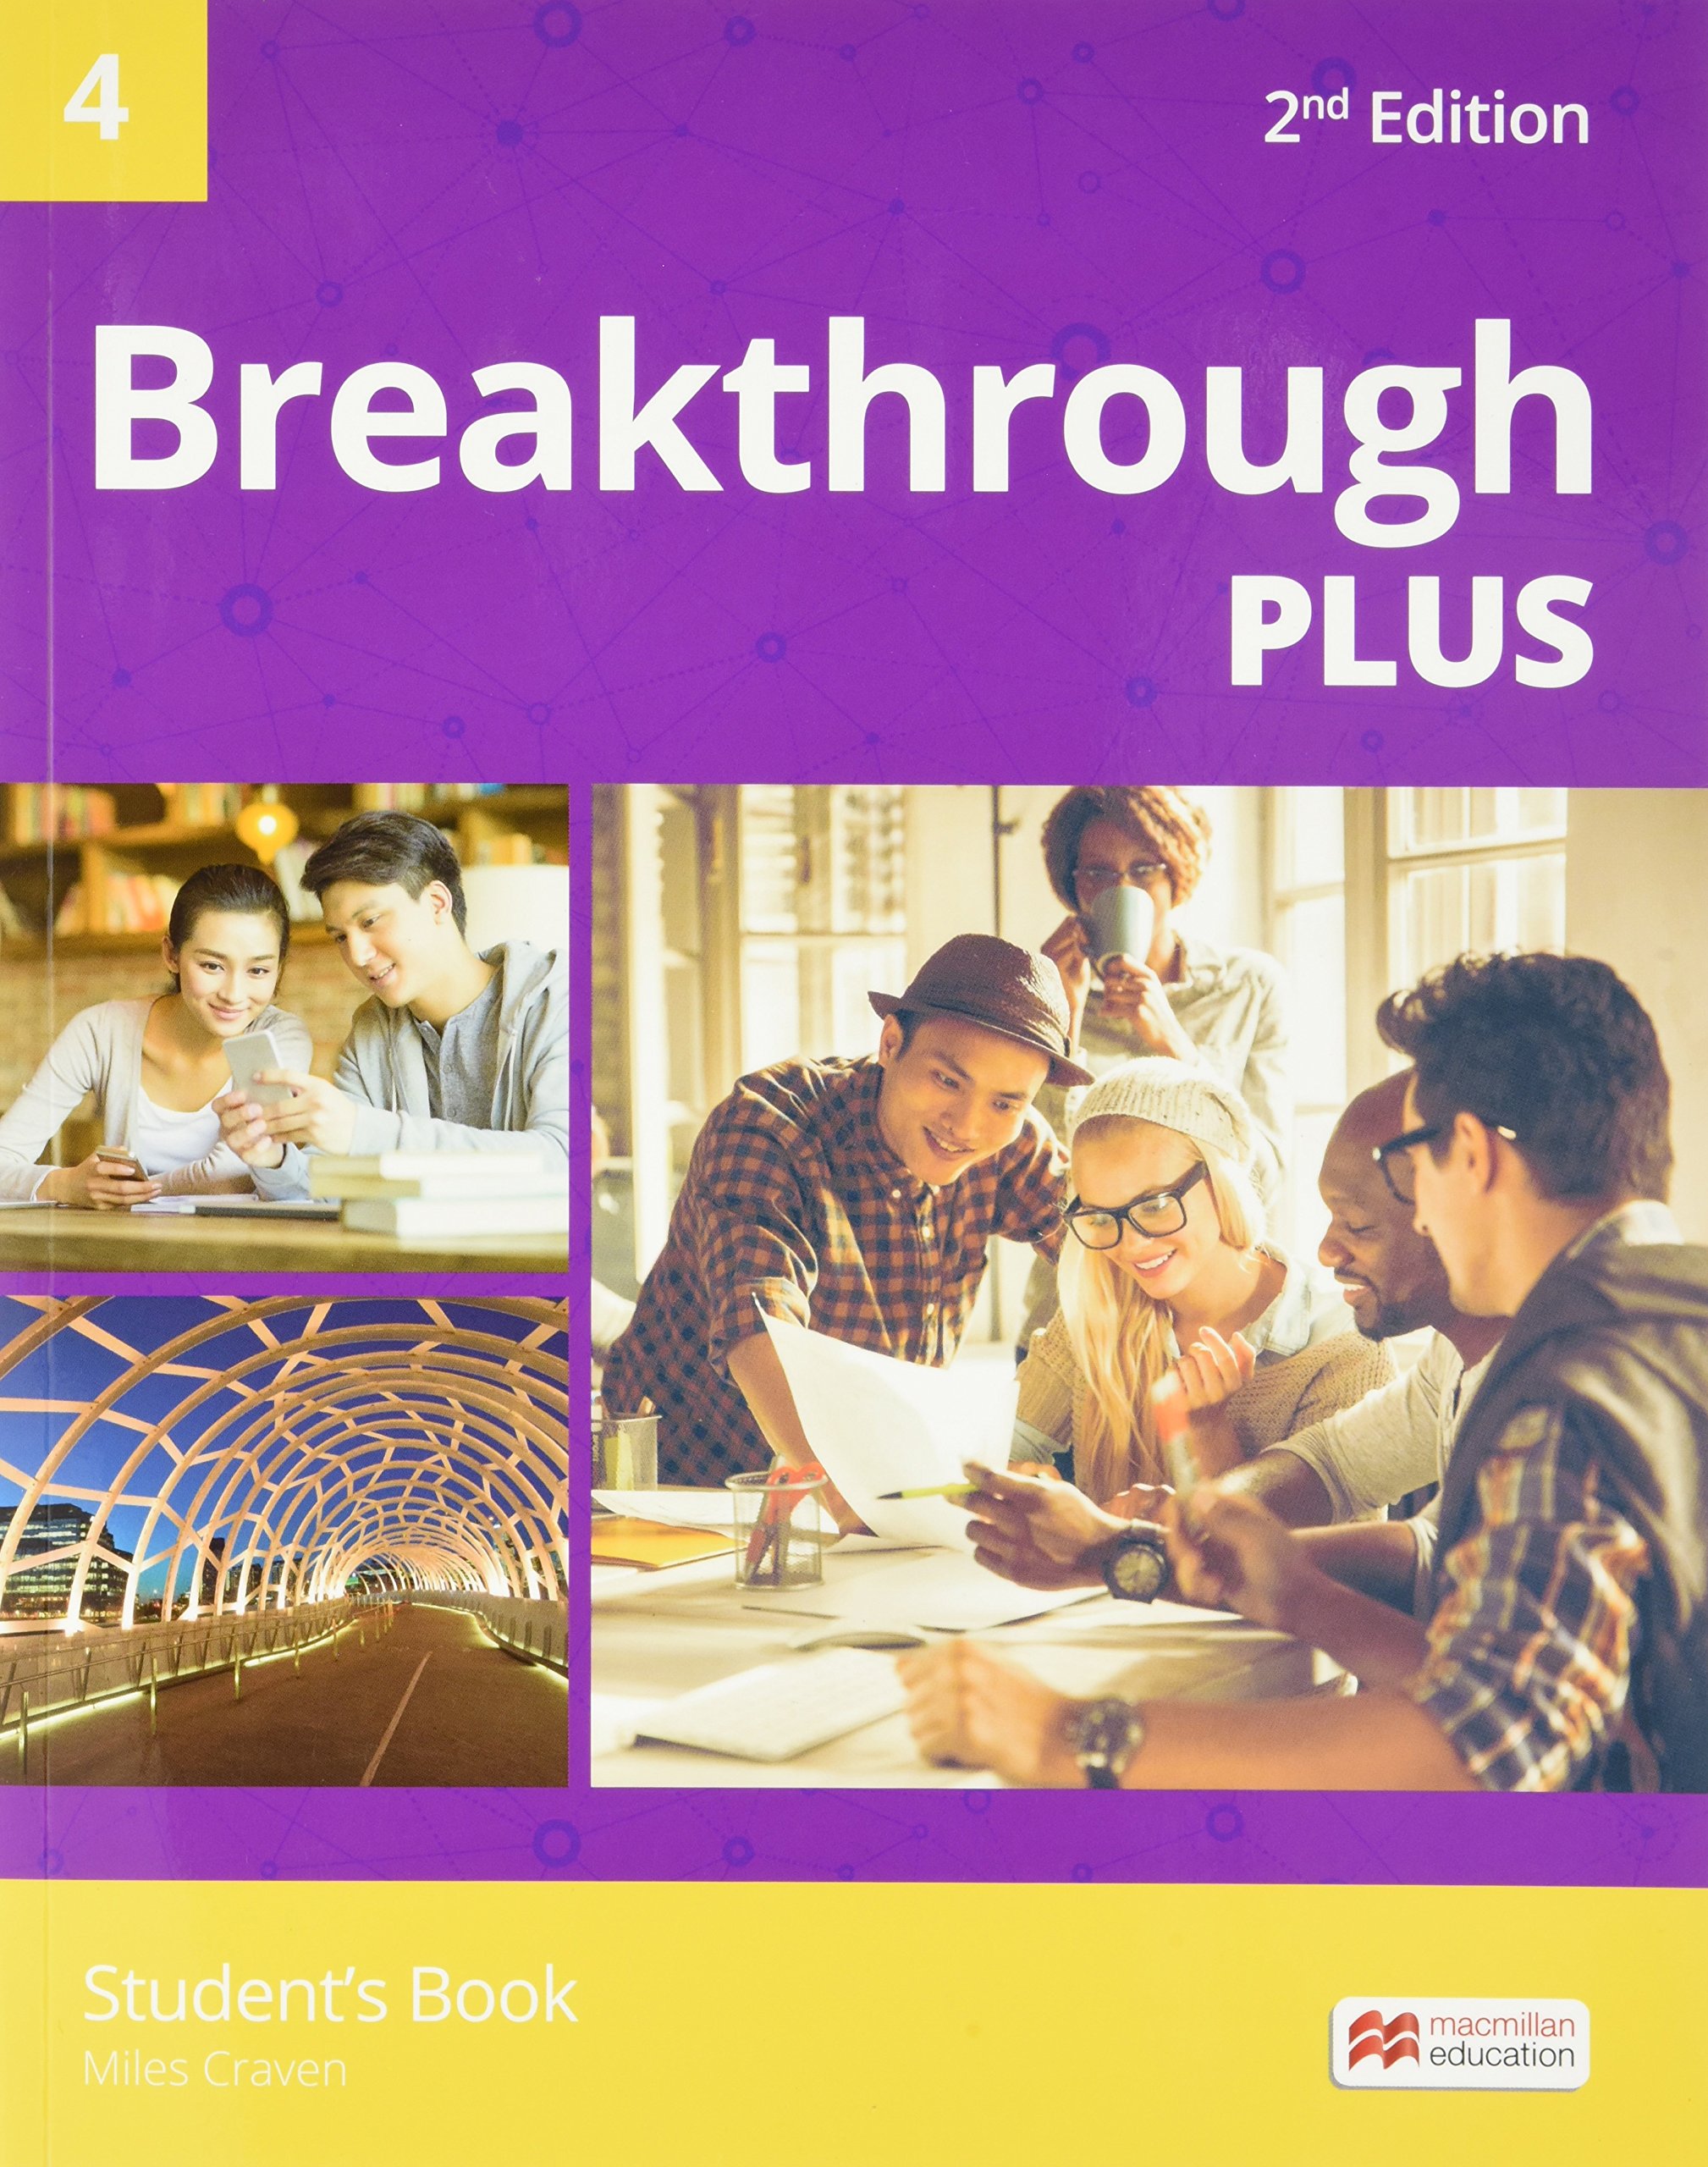 Breakthrough Plus Level 4 Student Book | Miles Craven